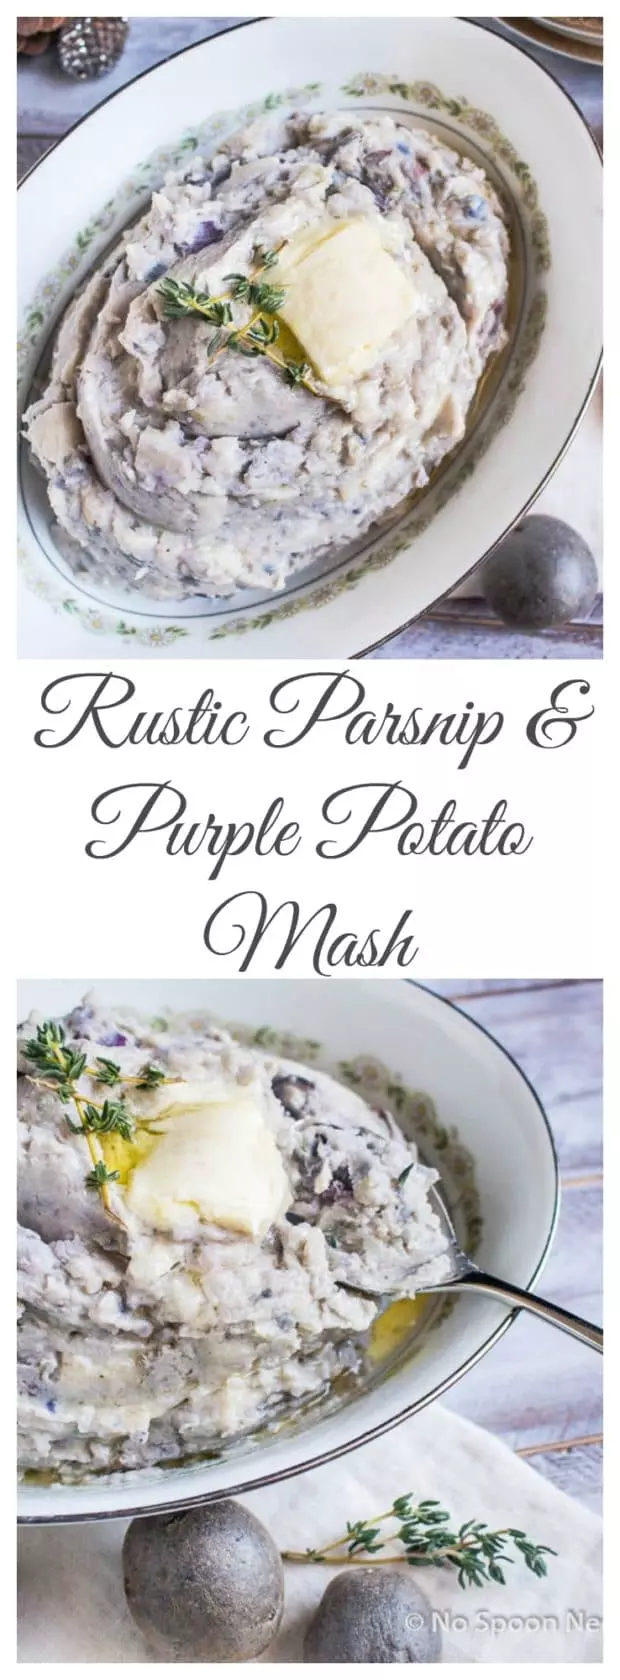 Parsnip & Purple Potato Mash 2